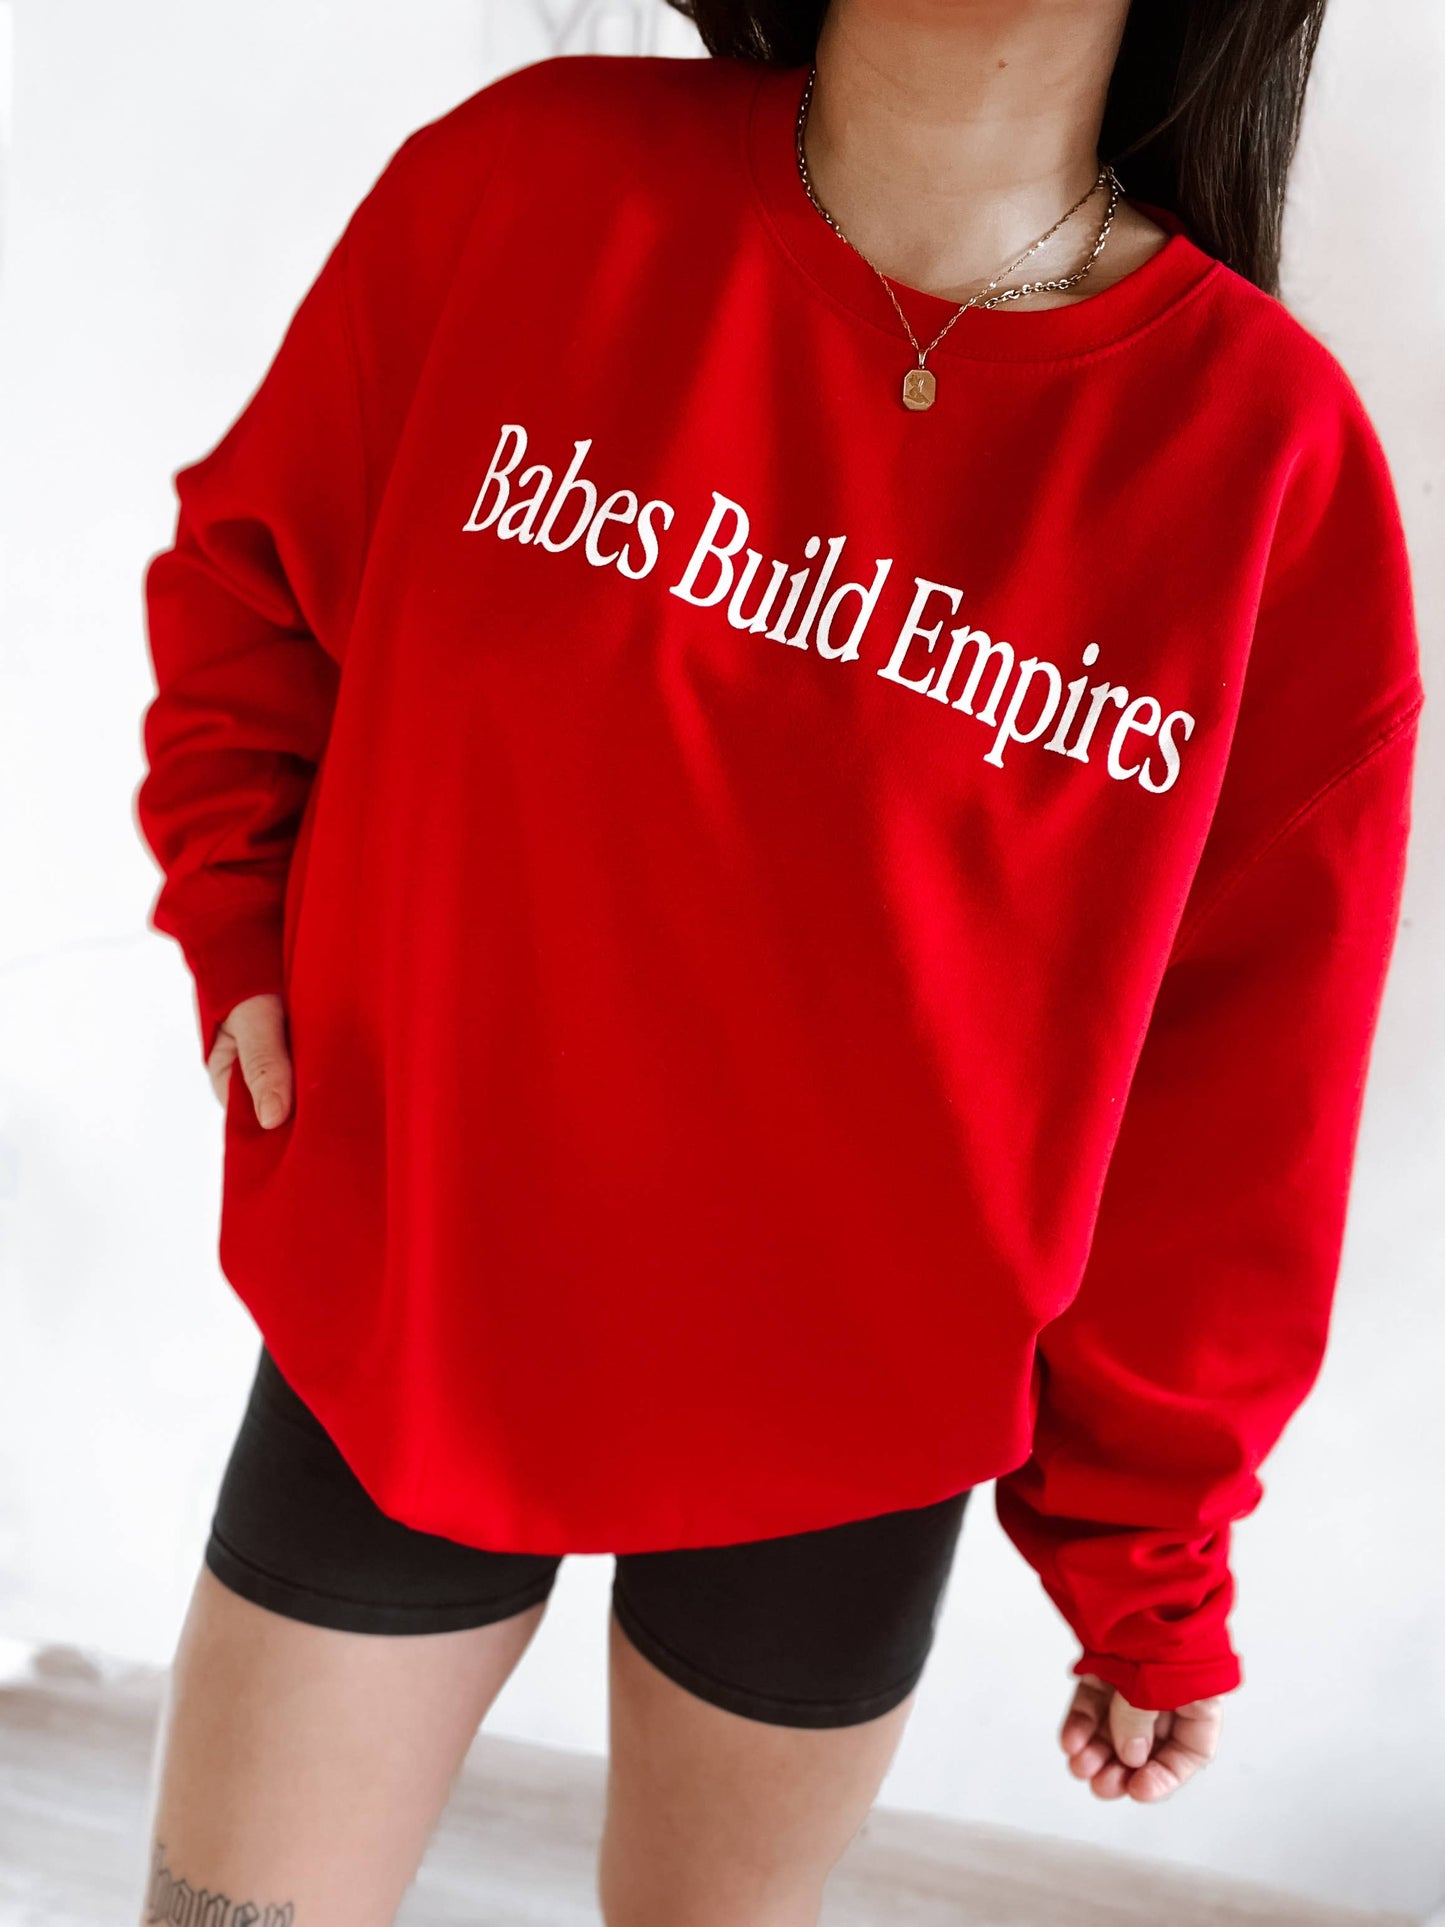 Babes Build Empires Crewneck | We The Babes